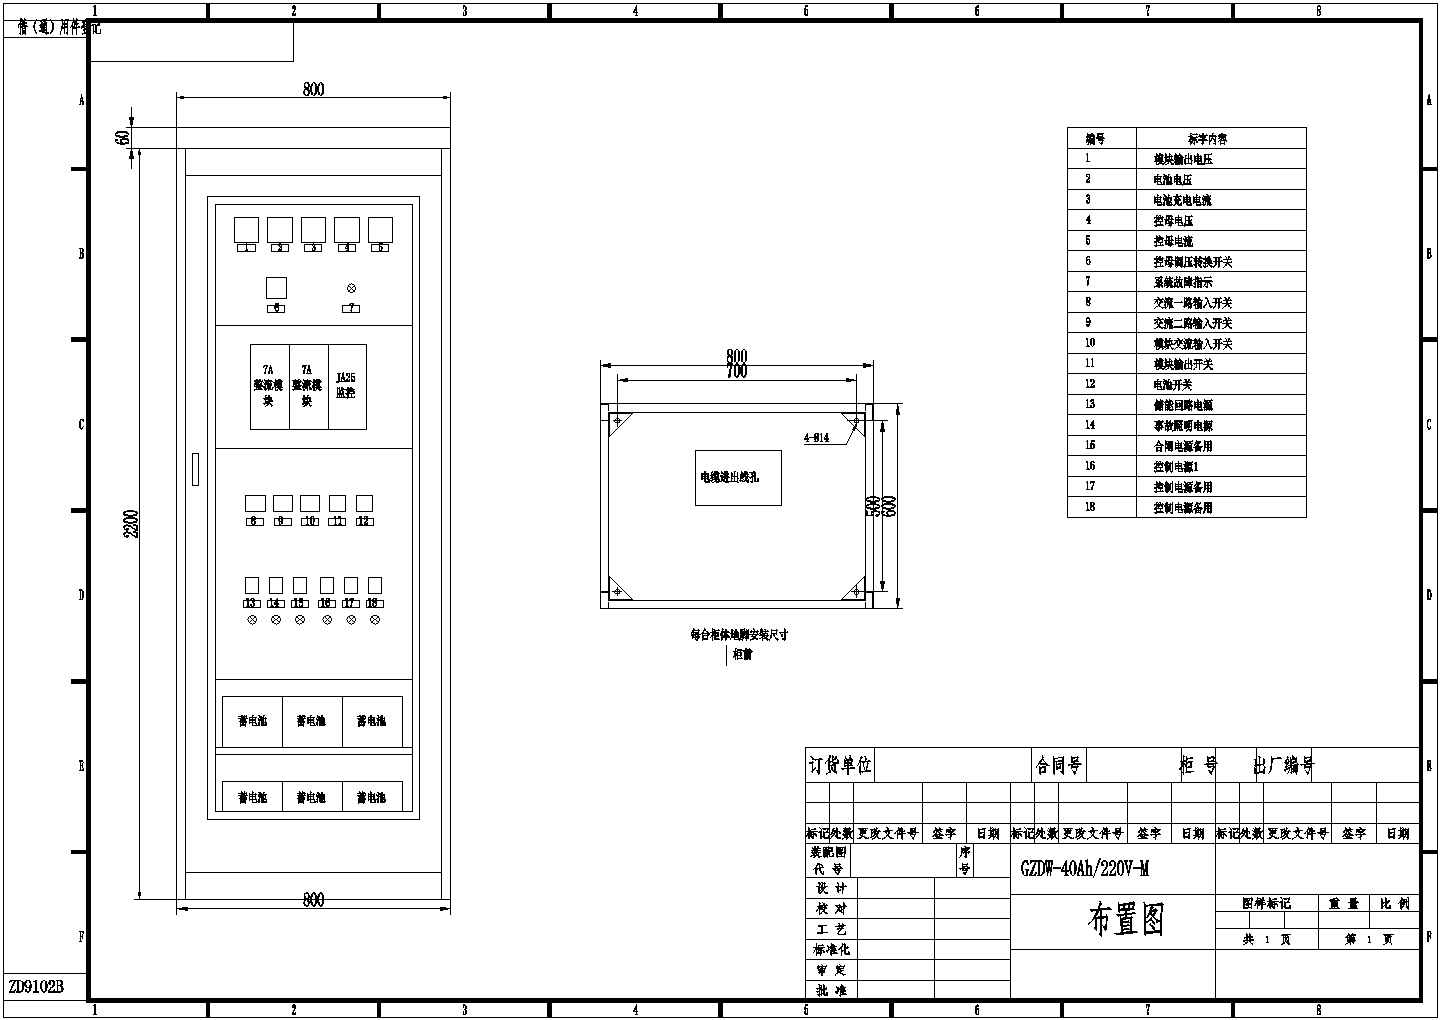 GZDW-40Ah/220V直流电源柜原理及布置图